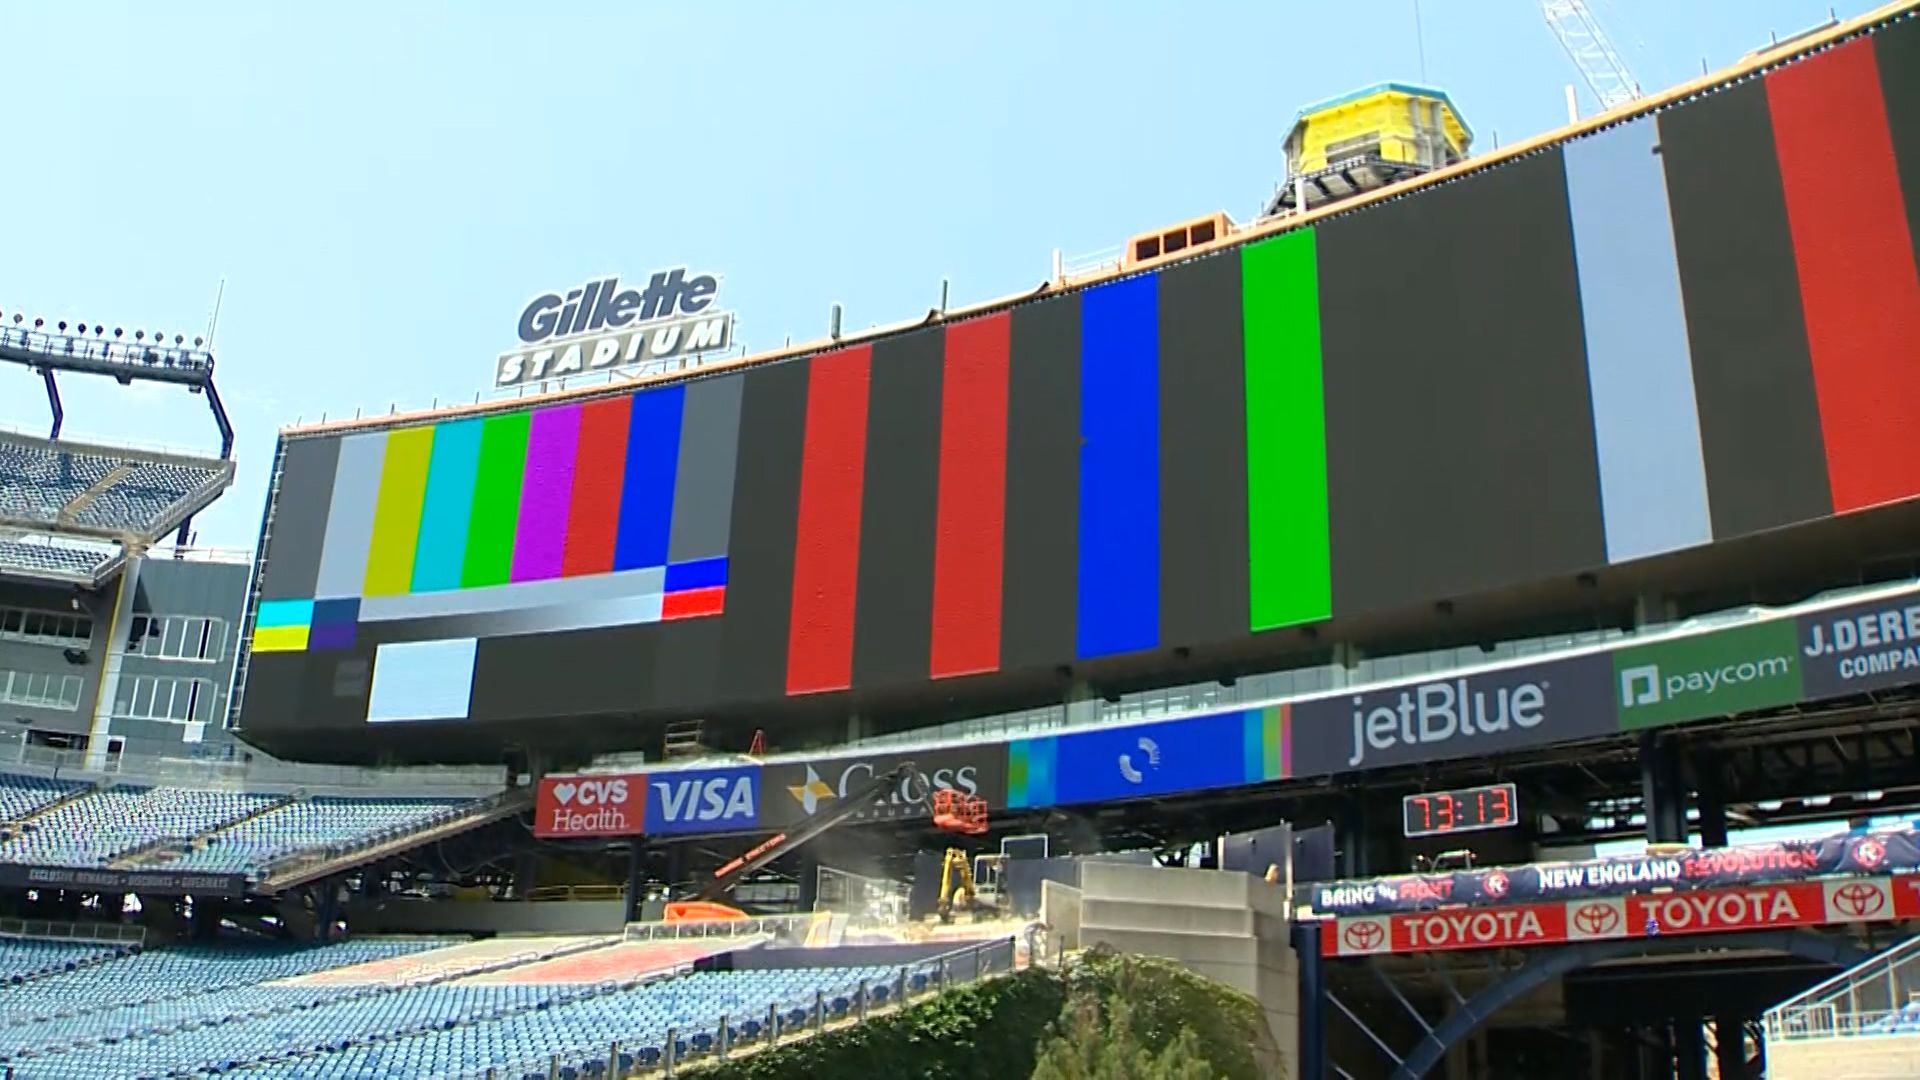 Gillette Stadium renovations complete ahead of Patriots season